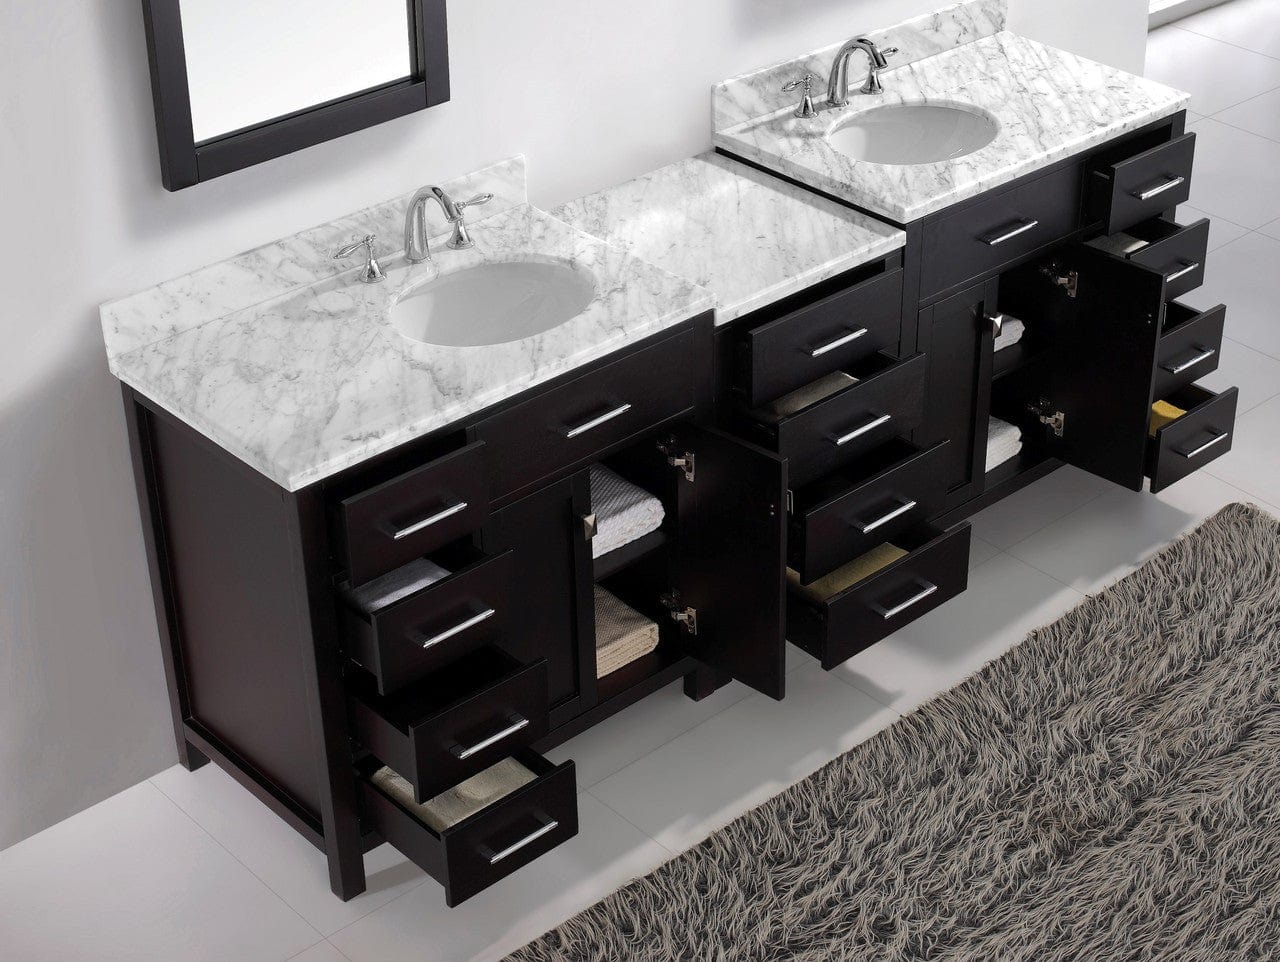 Virtu USA Caroline Parkway 93 Double Bathroom Vanity Set in Espresso w/ Italian Carrara White Marble Counter-Top |Ê Round Basin